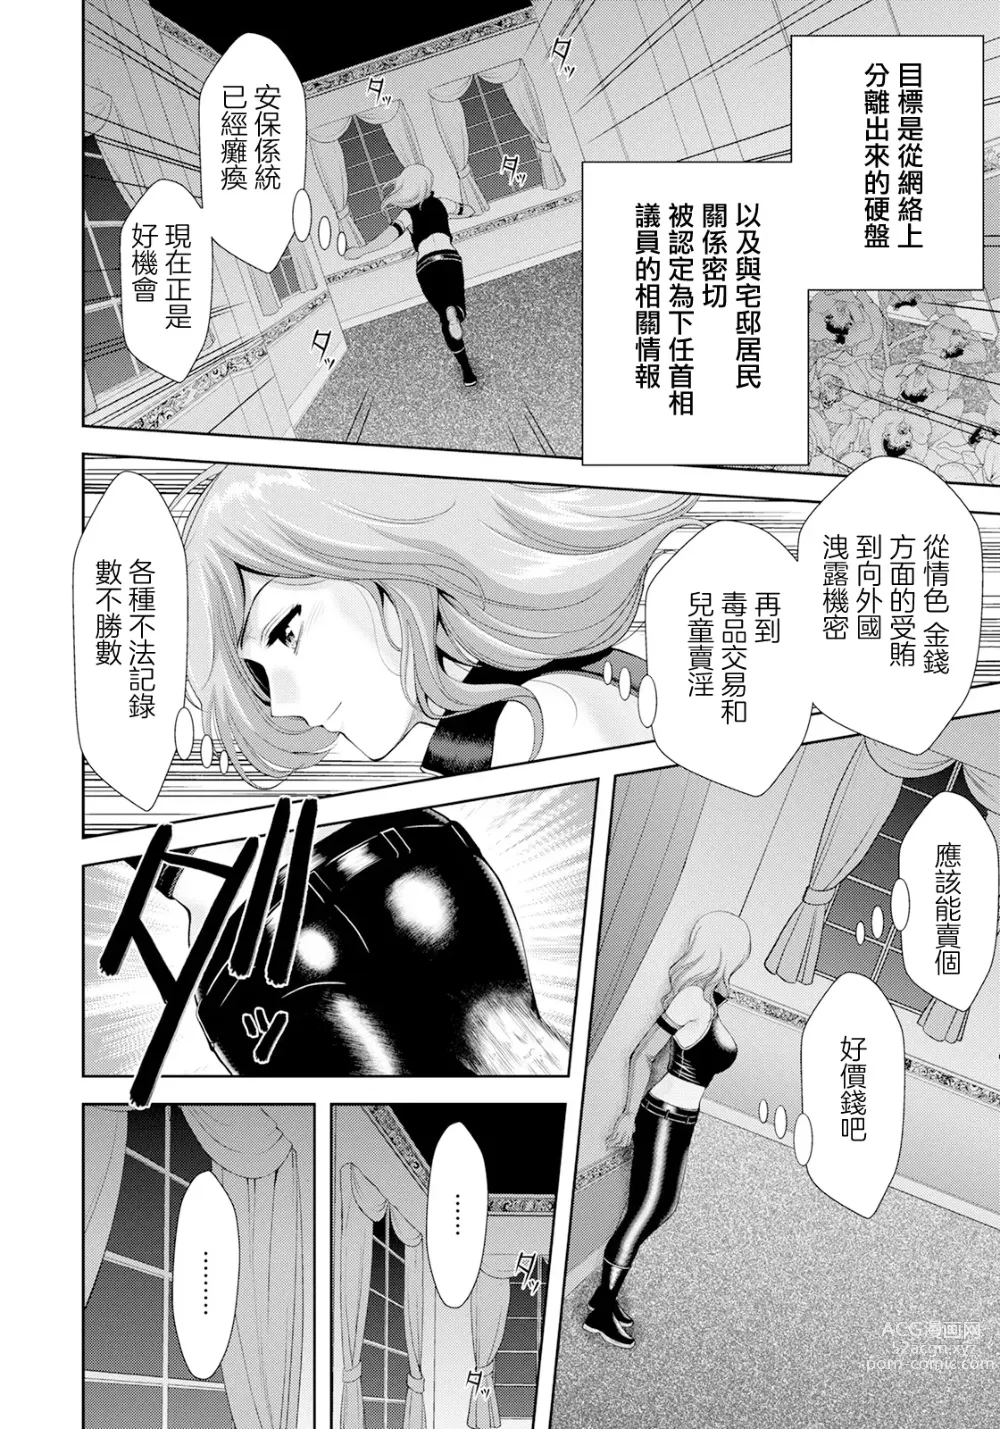 Page 6 of manga Gizoku? Sumeragi Settoudan